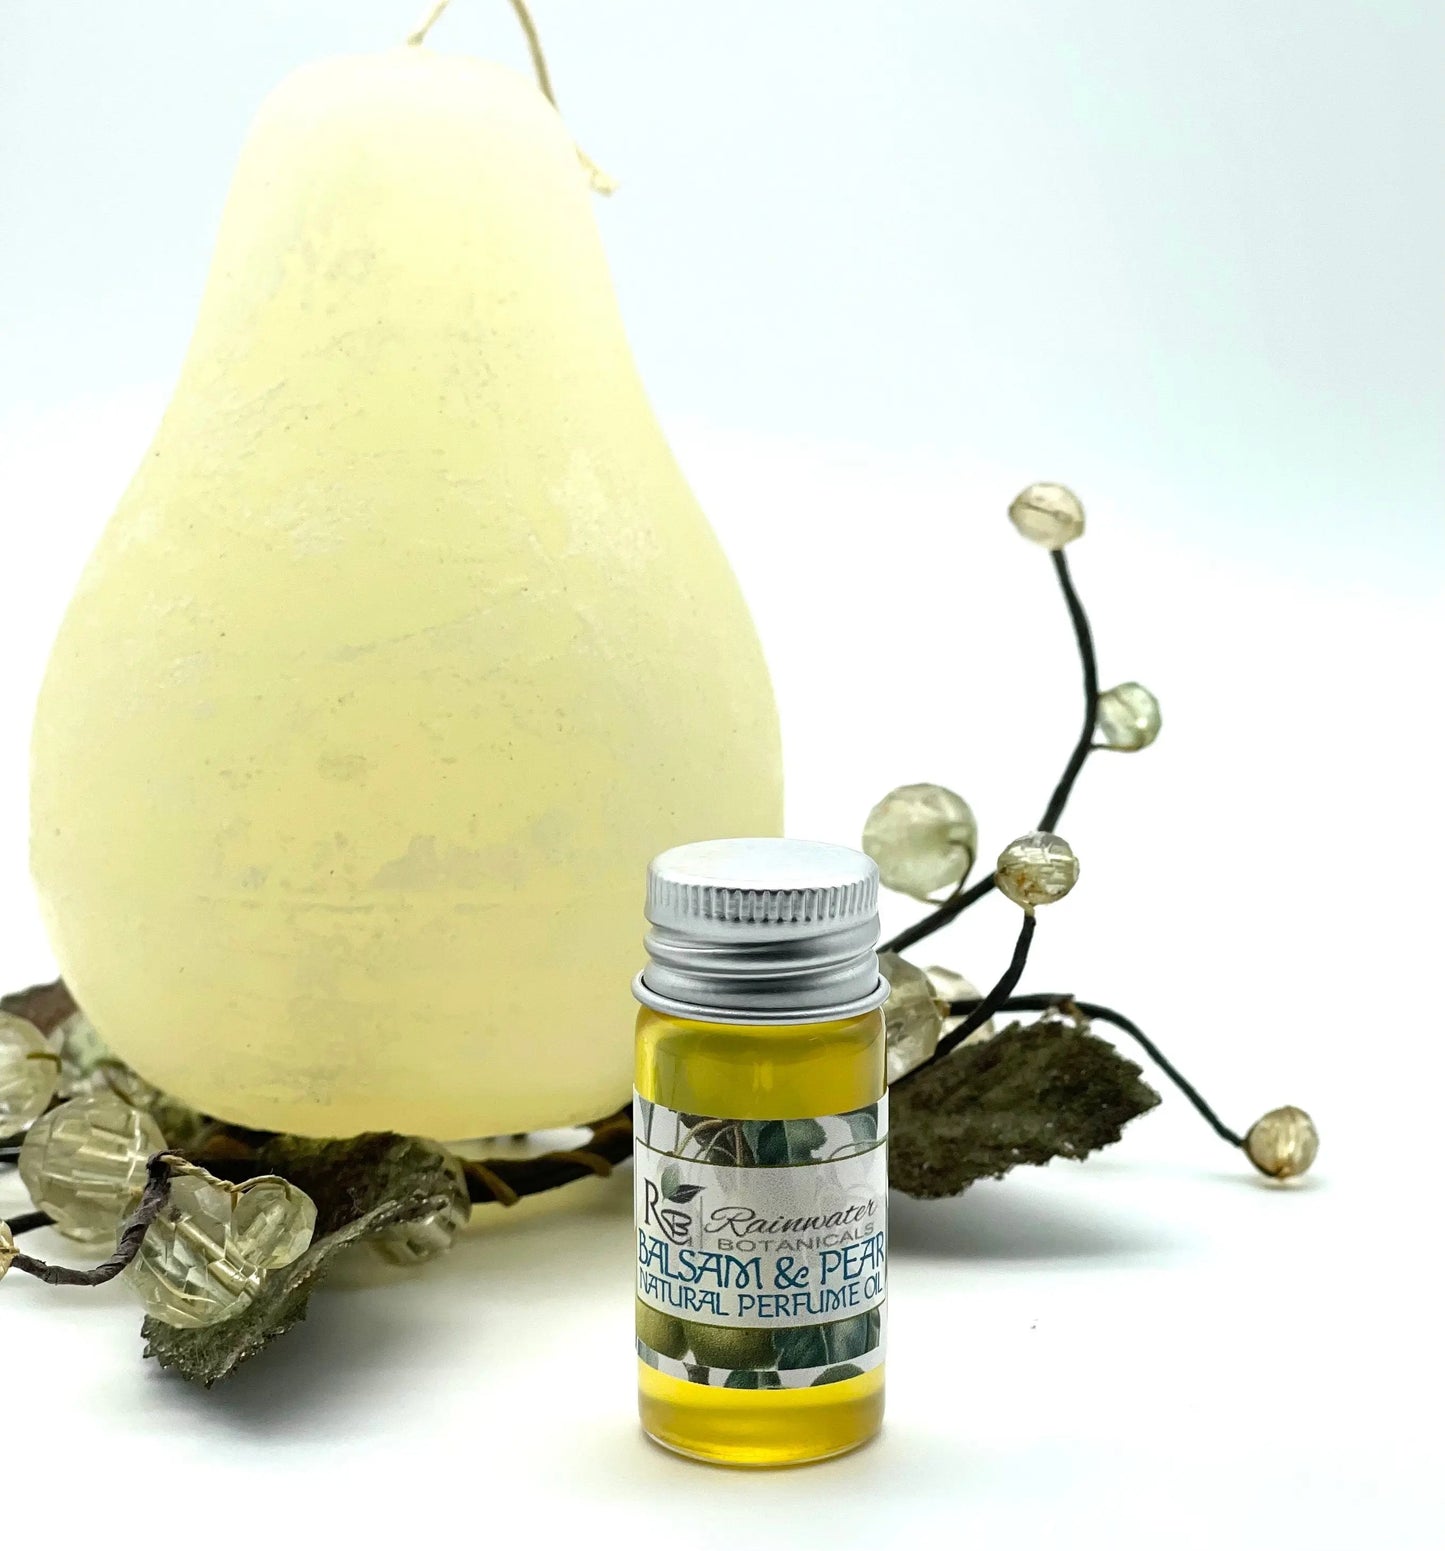 Balsam & Pear natural perfume oil